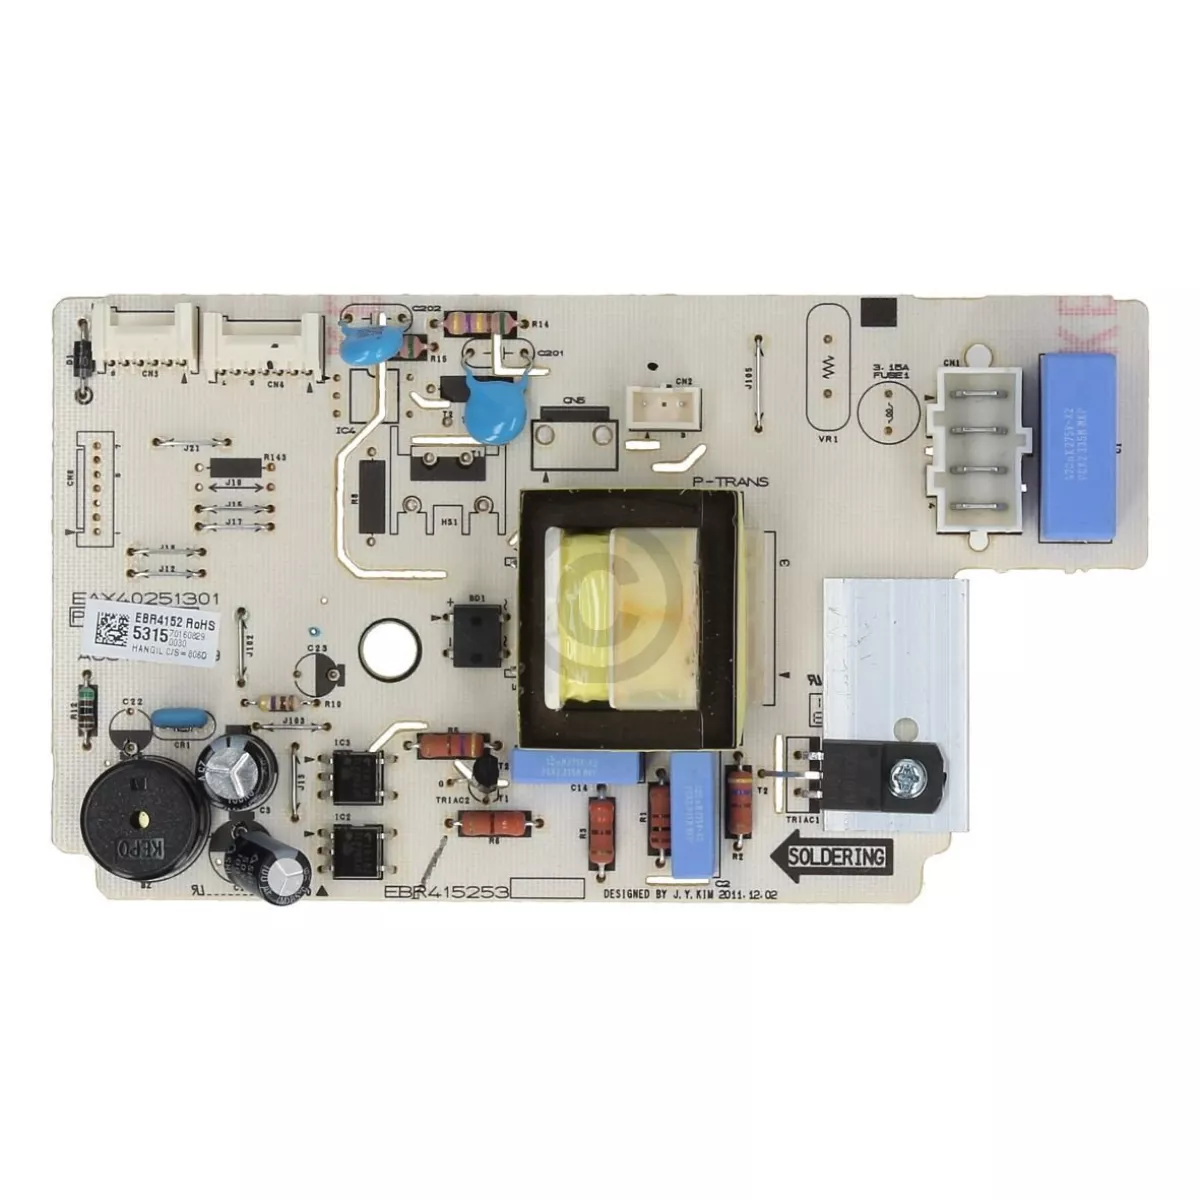 #1 - Elektronik LG EBR41525315 til Støvsuger passer til Bosch